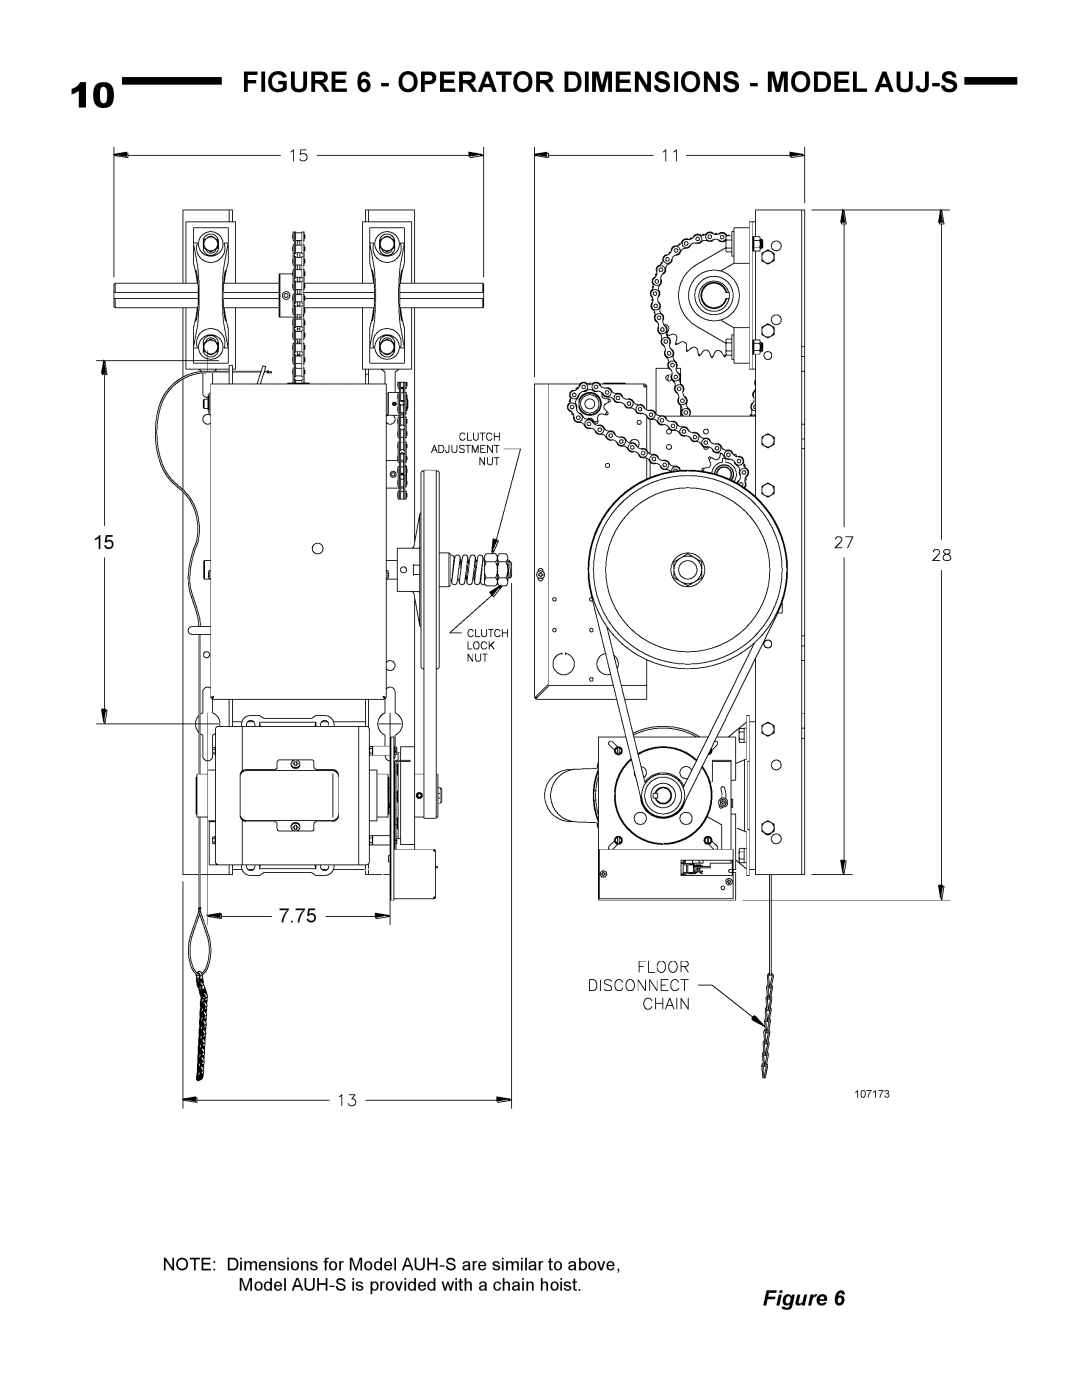 Linear AUJ-S, AUH-S owner manual Operator Dimensions - Model Auj-S, 7.75 